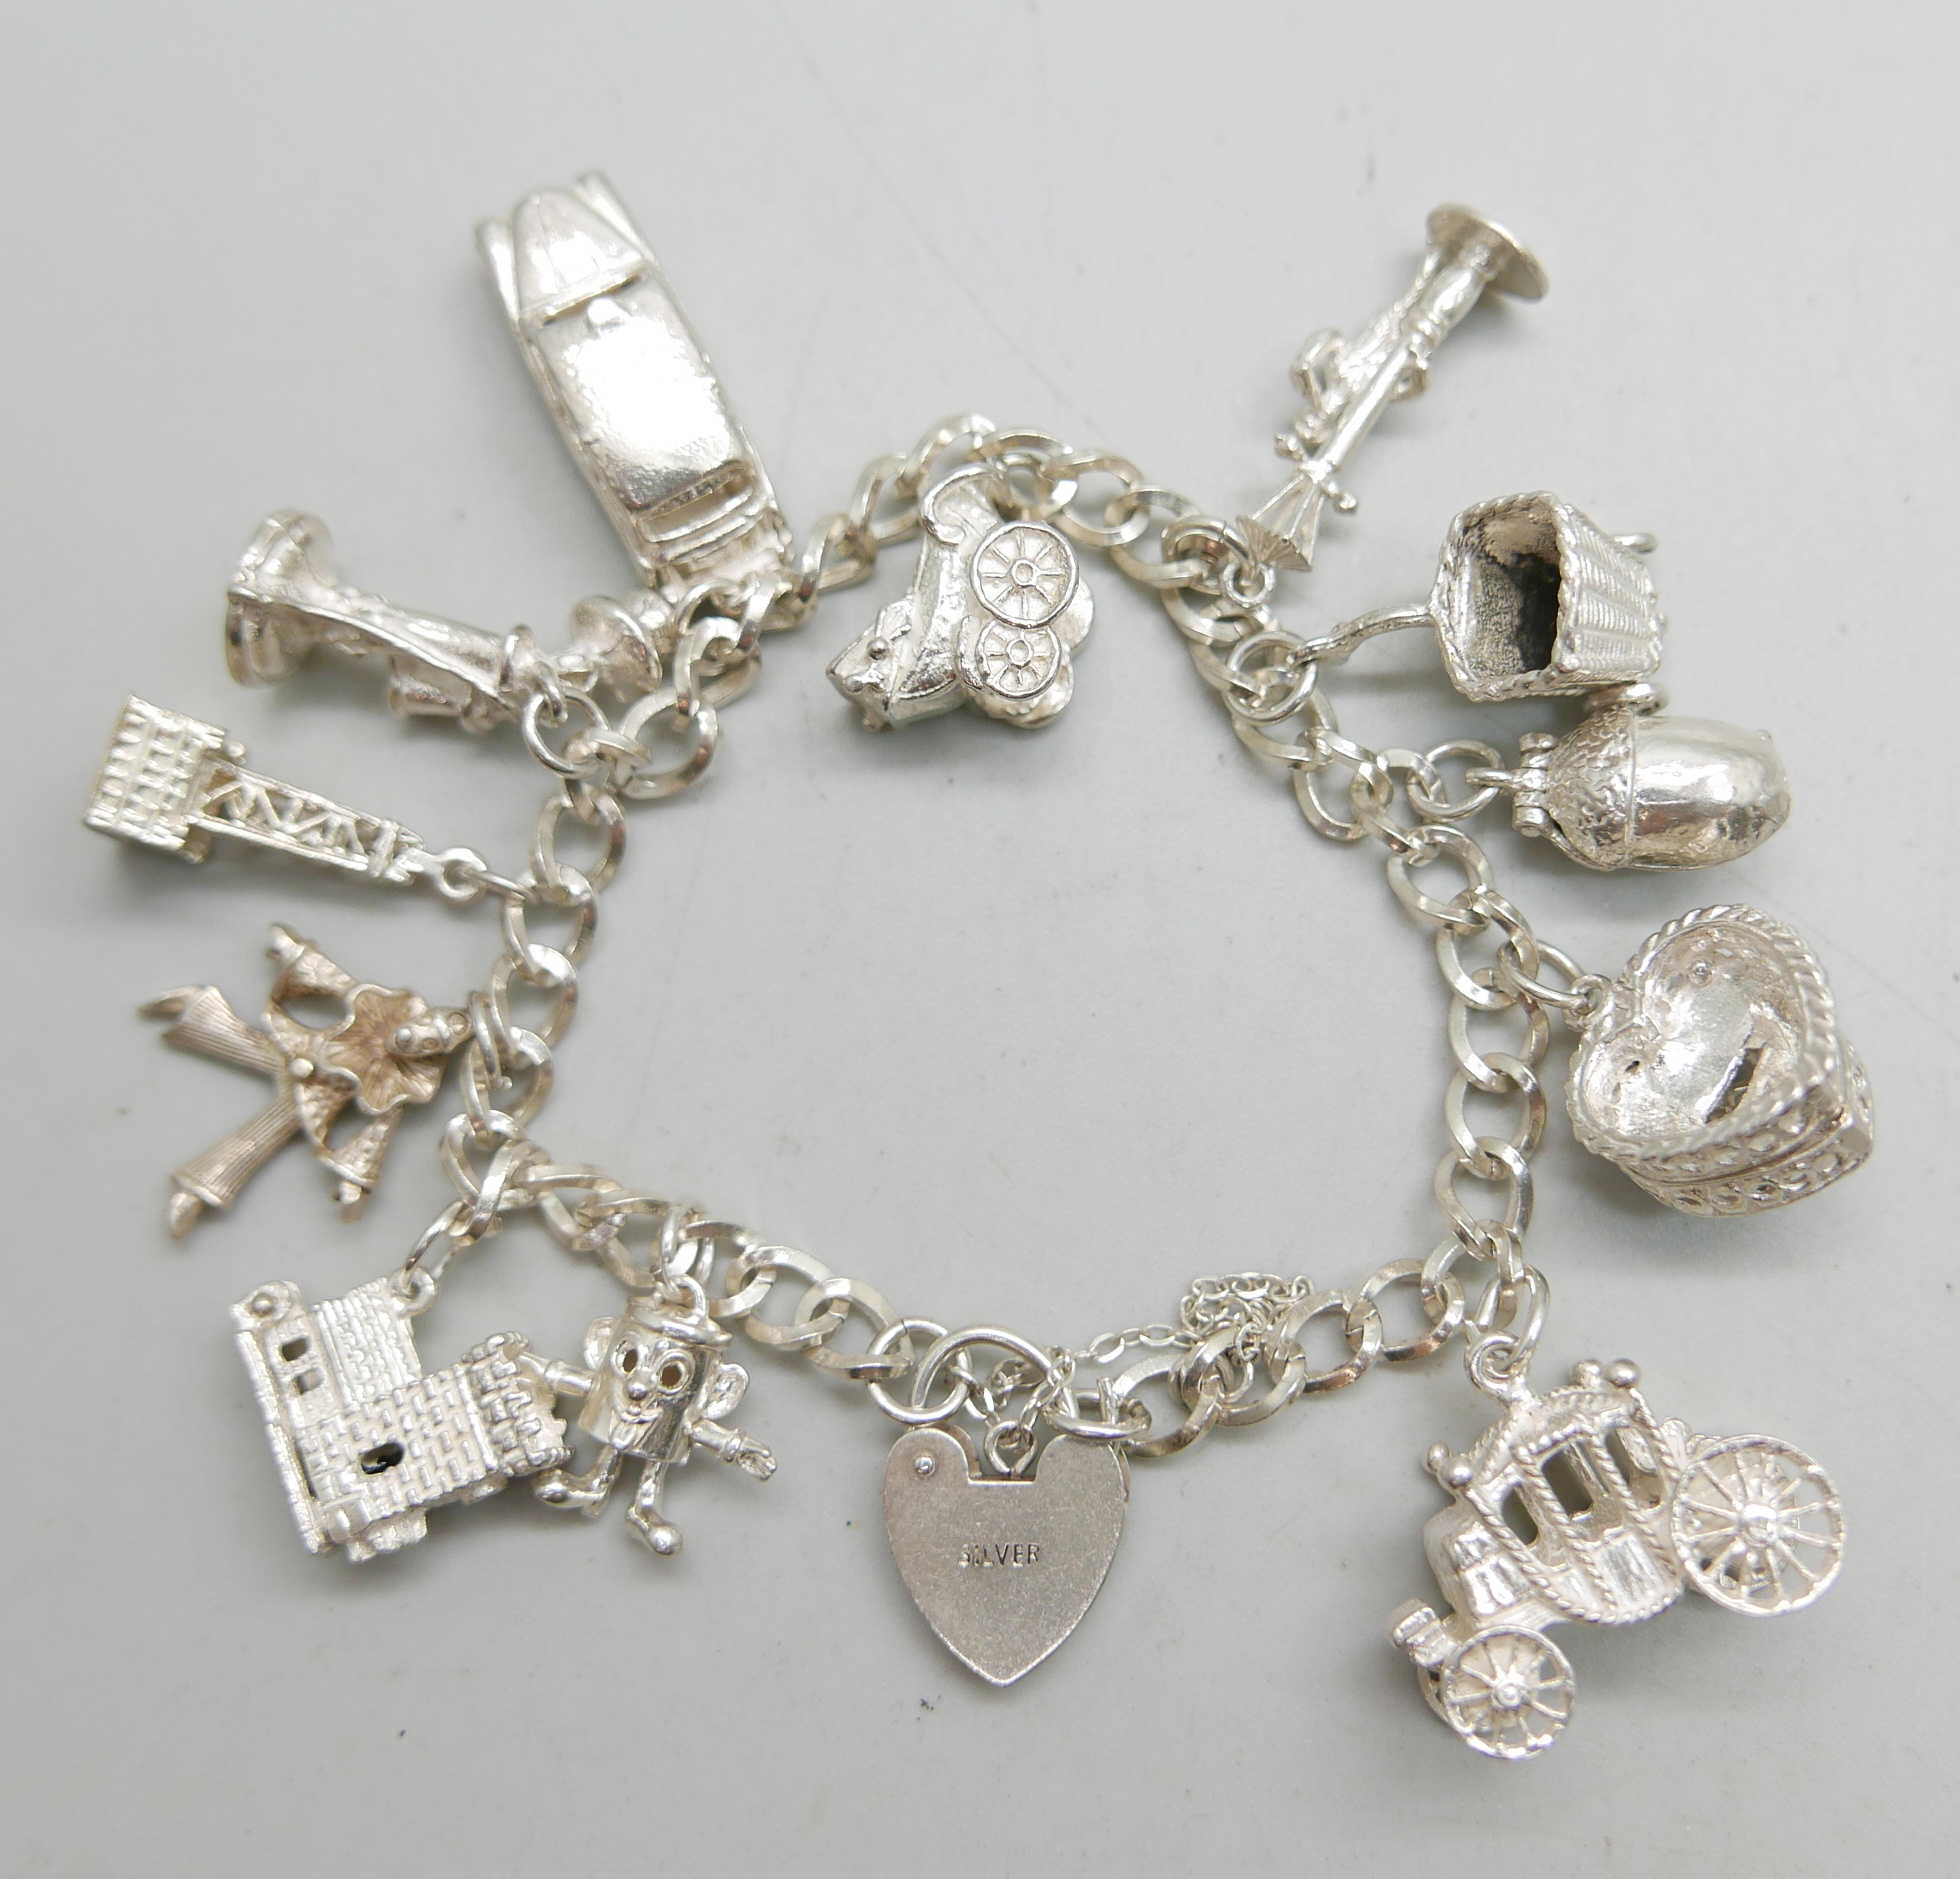 A silver charm bracelet, 50g